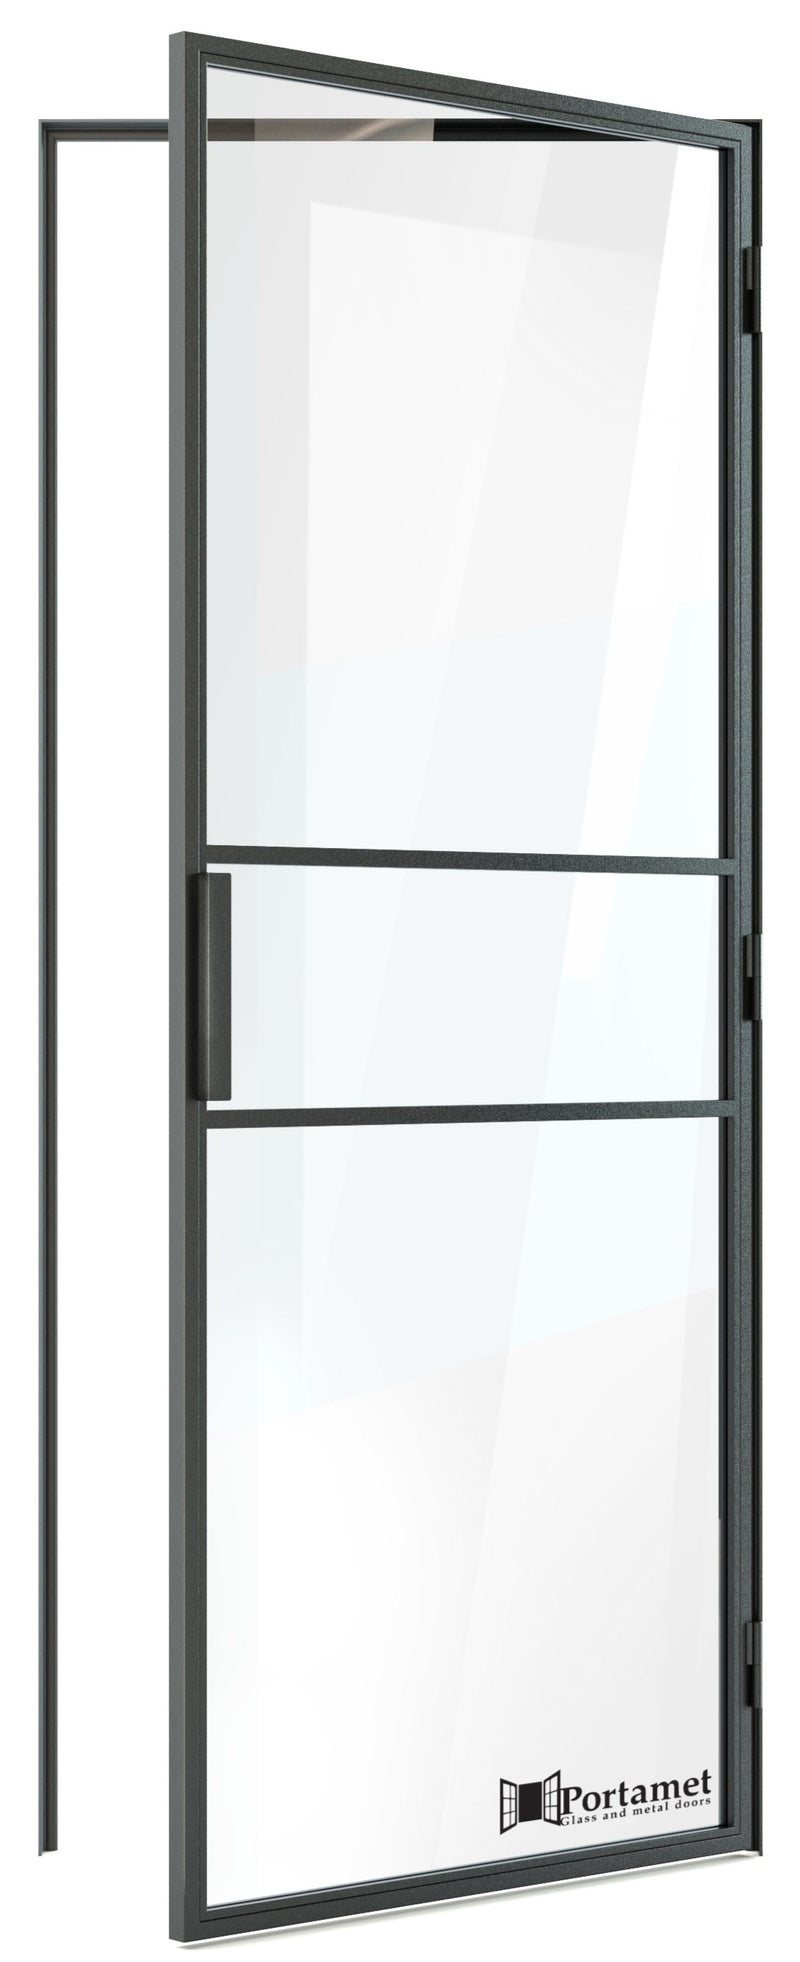 Portamet by Sfarzo - Italia Classic Single Glazed Steel Hinged Door with Frame